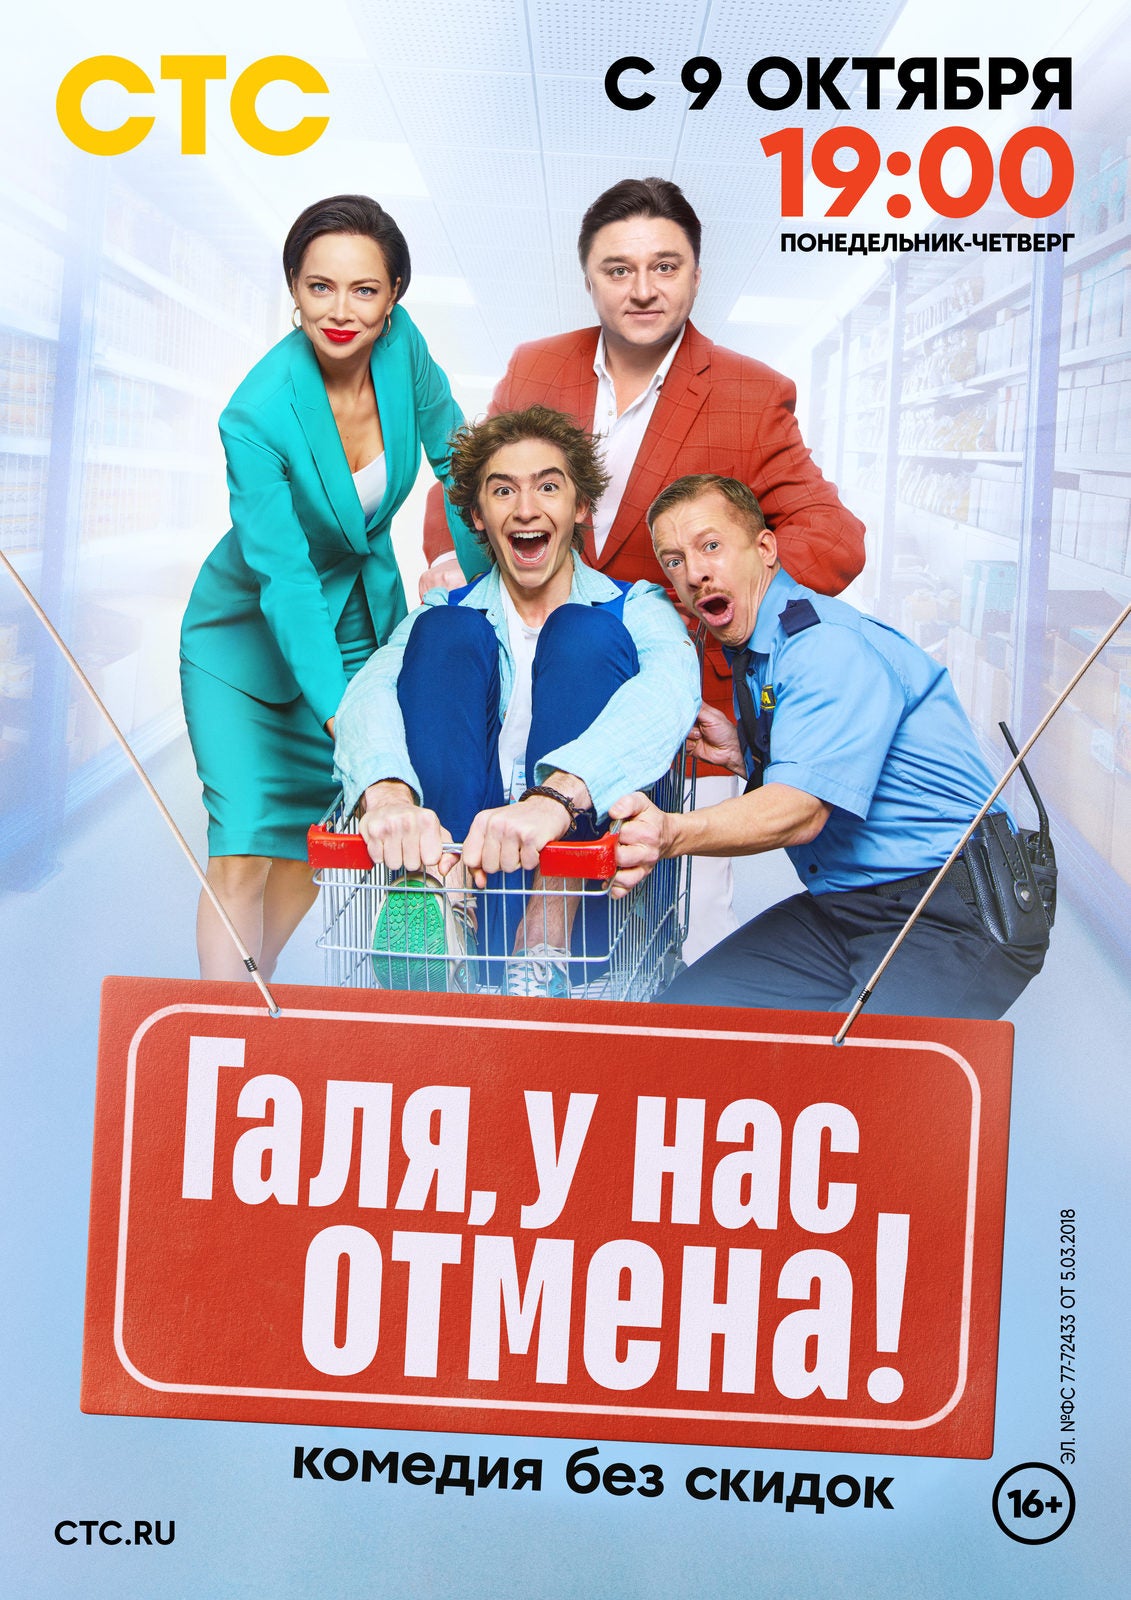 TV ratings for Galya, U Nas Otmena! (Галя, У Нас Отмена!) in Germany. CTC TV series